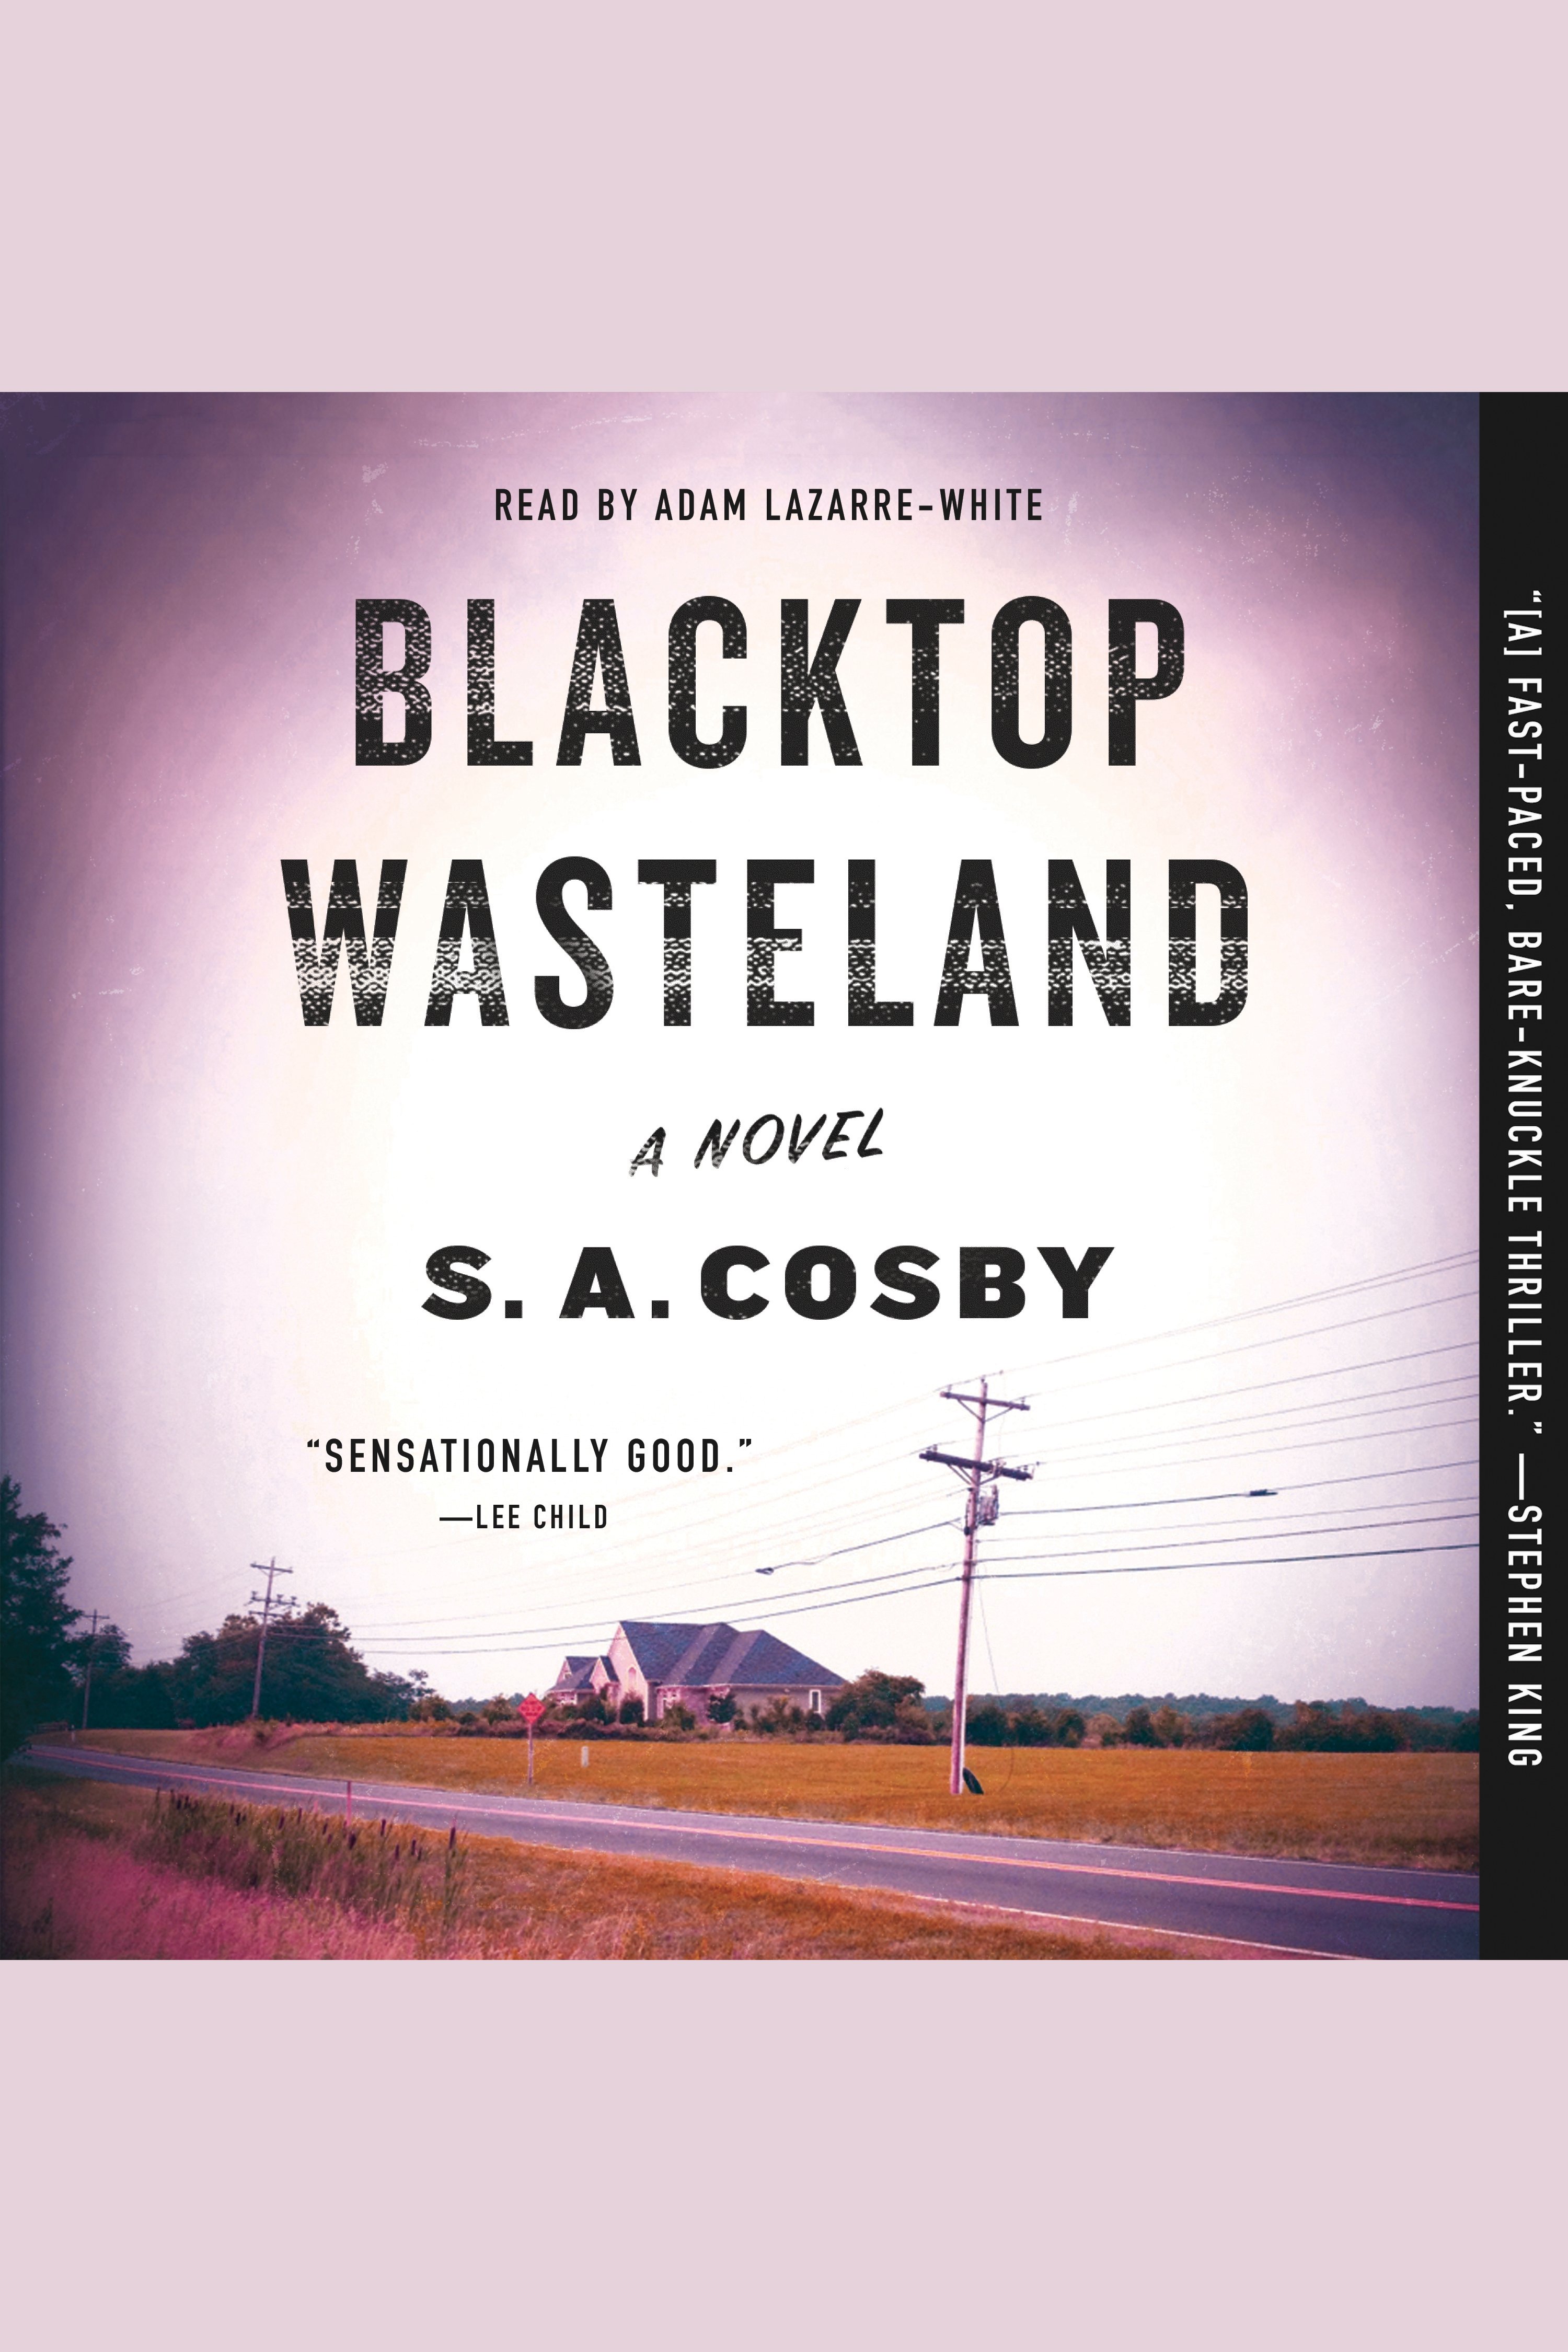 Blacktop wasteland cover image